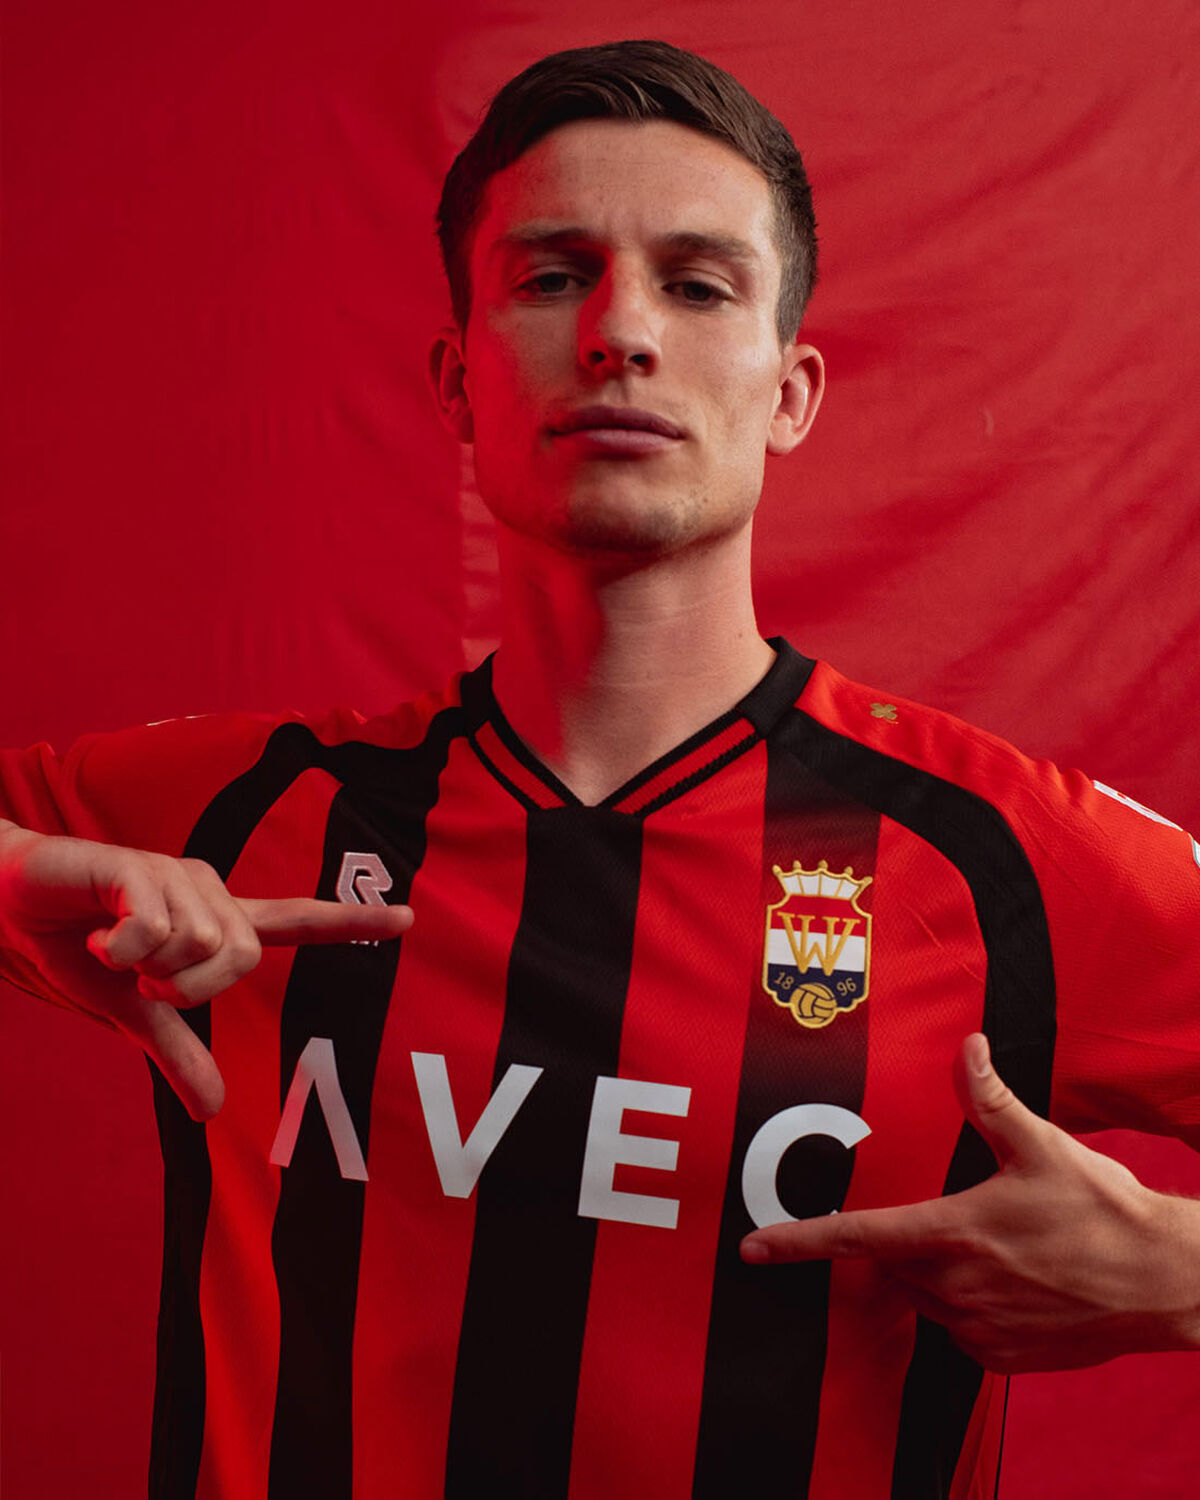 Willem II Away Shirt 23/24, Red/Black, hi-res